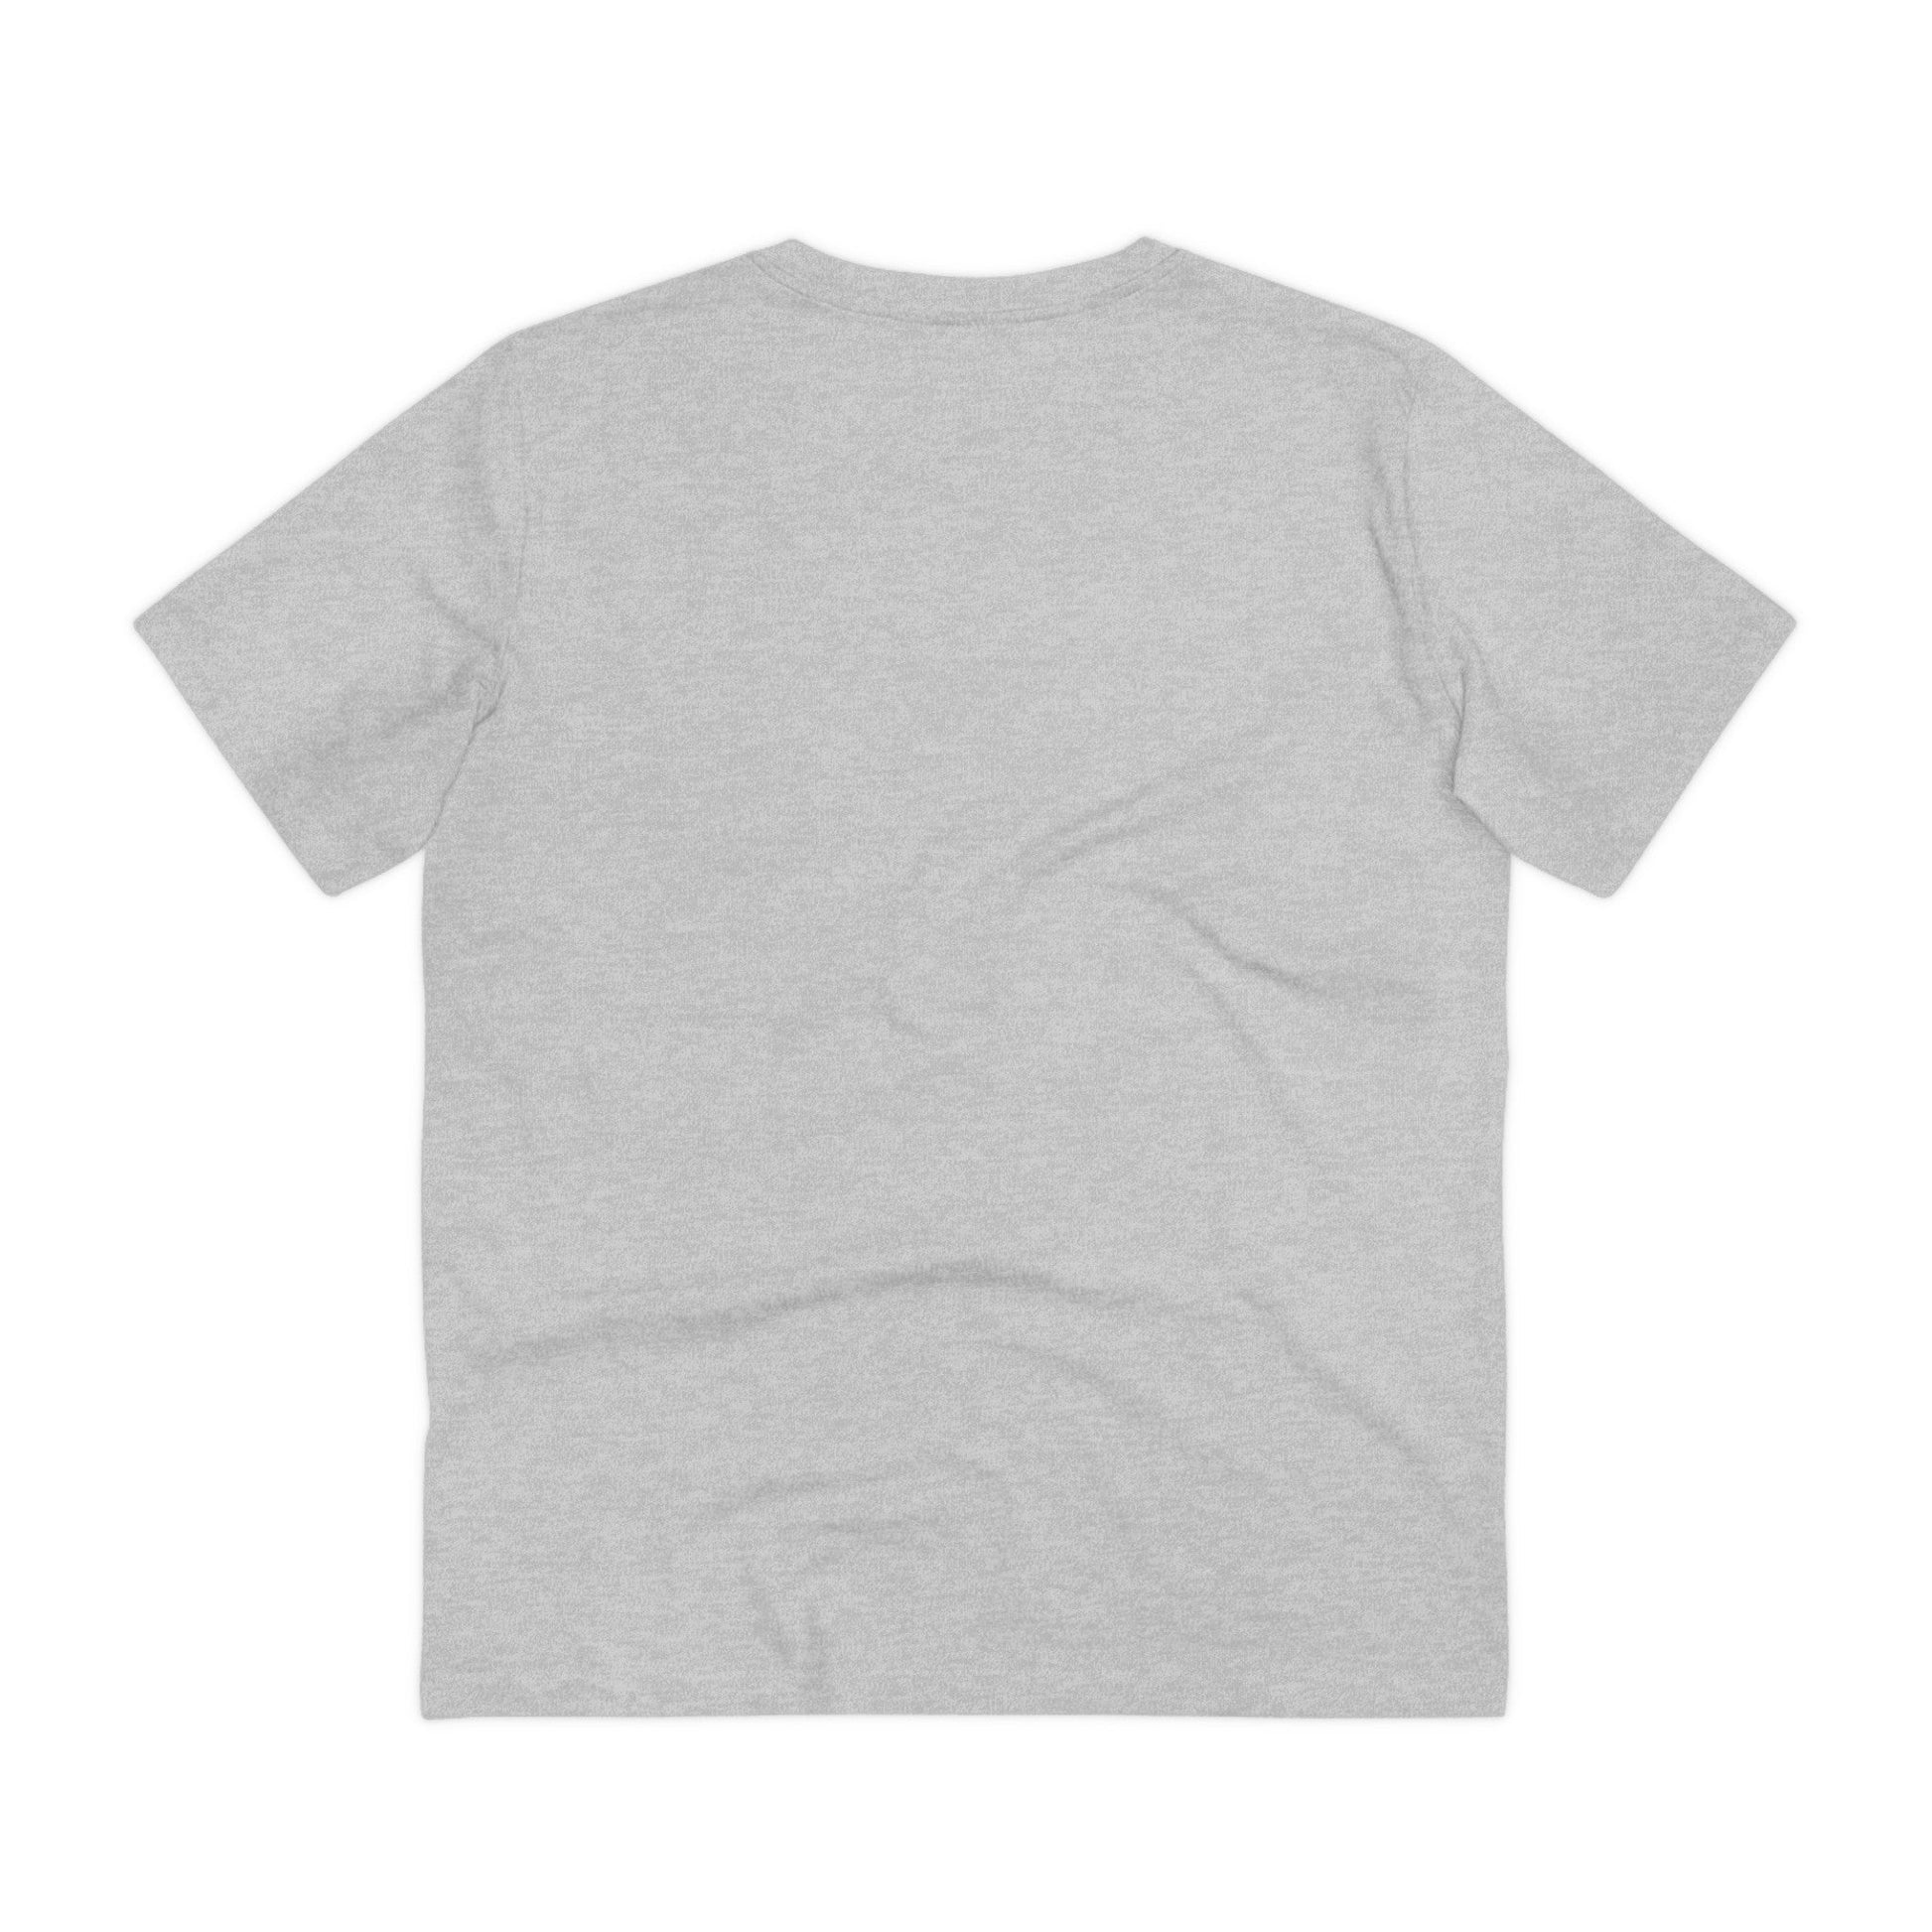 Printify T-Shirt Limitations Self-Imposed - Streetwear - Gods Way - Front Design